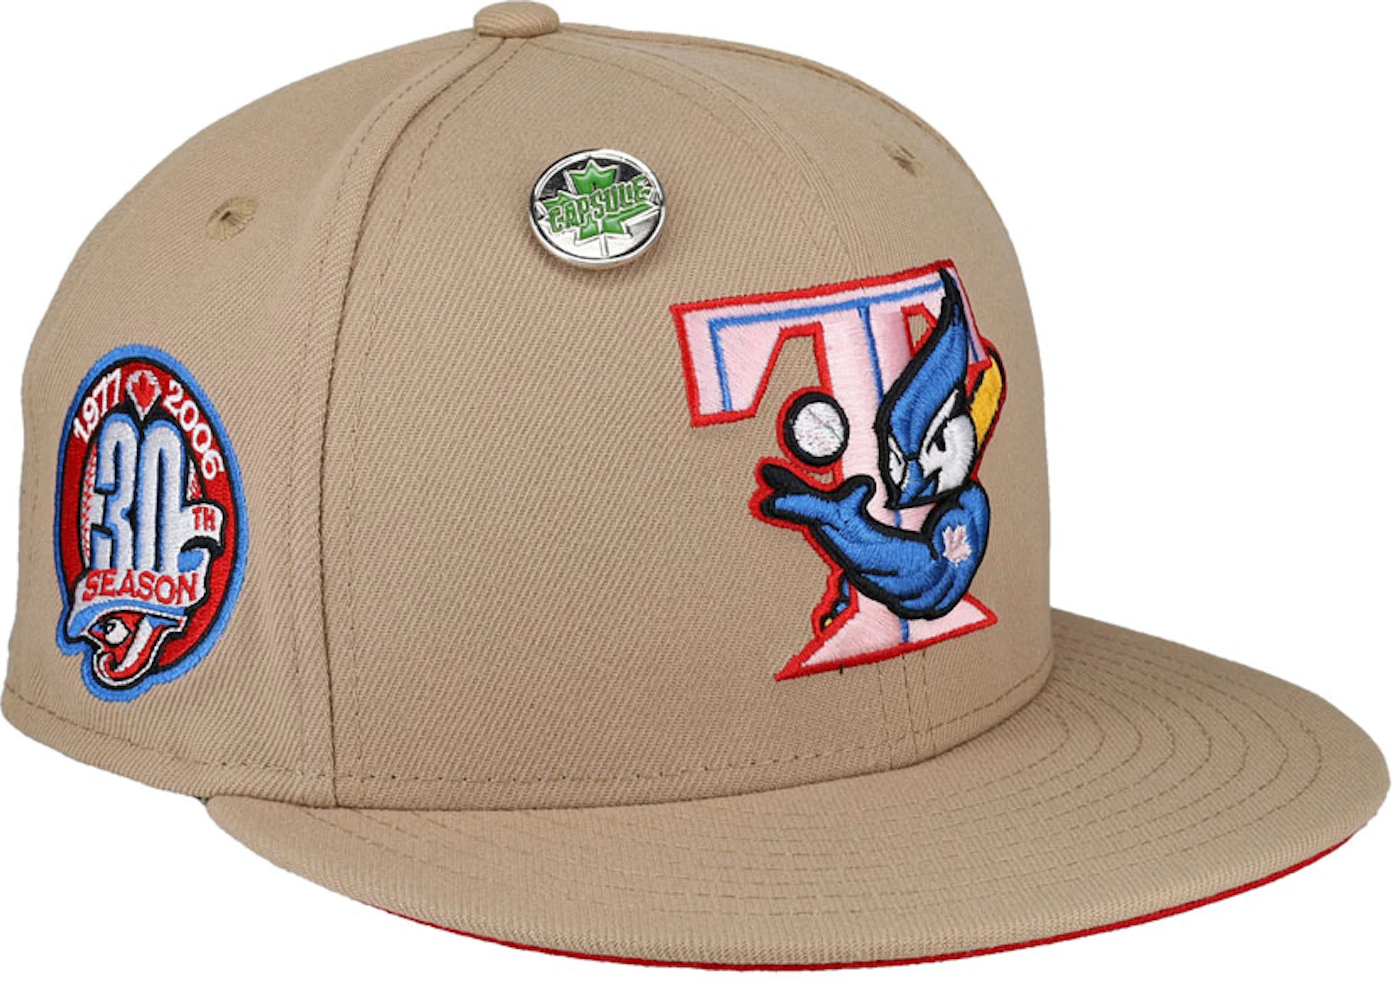 Toronto Blue Jays New Era Fitted Hat 7 3/8 Lids Oceanside Peach